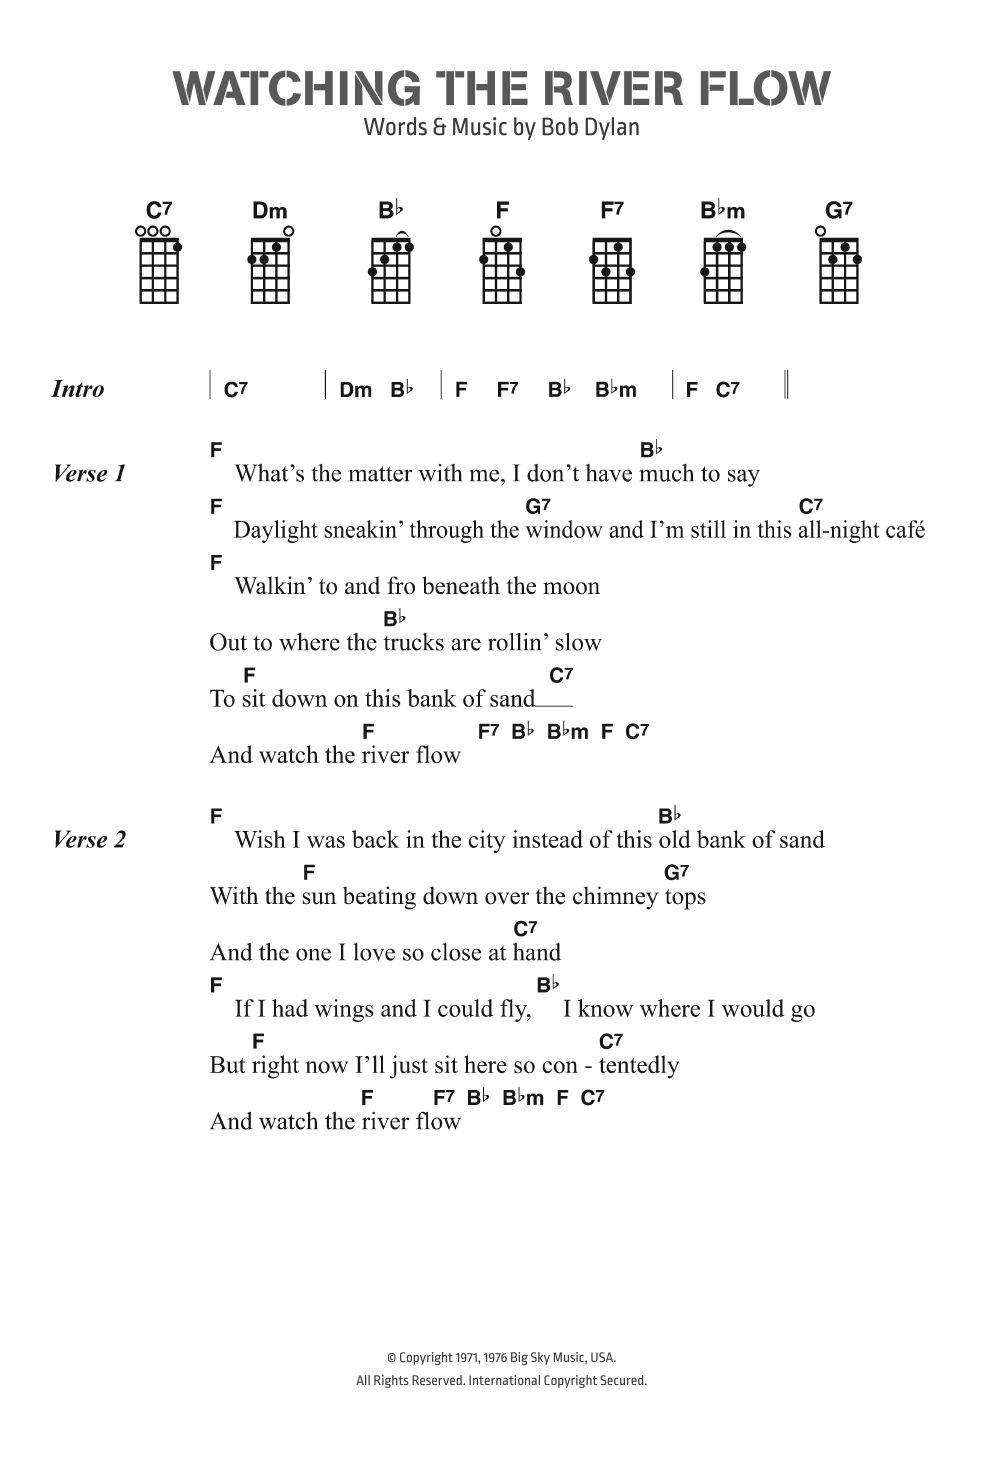 Bob Dylan Watching The River Flow Sheet Music Notes & Chords for Ukulele Lyrics & Chords - Download or Print PDF